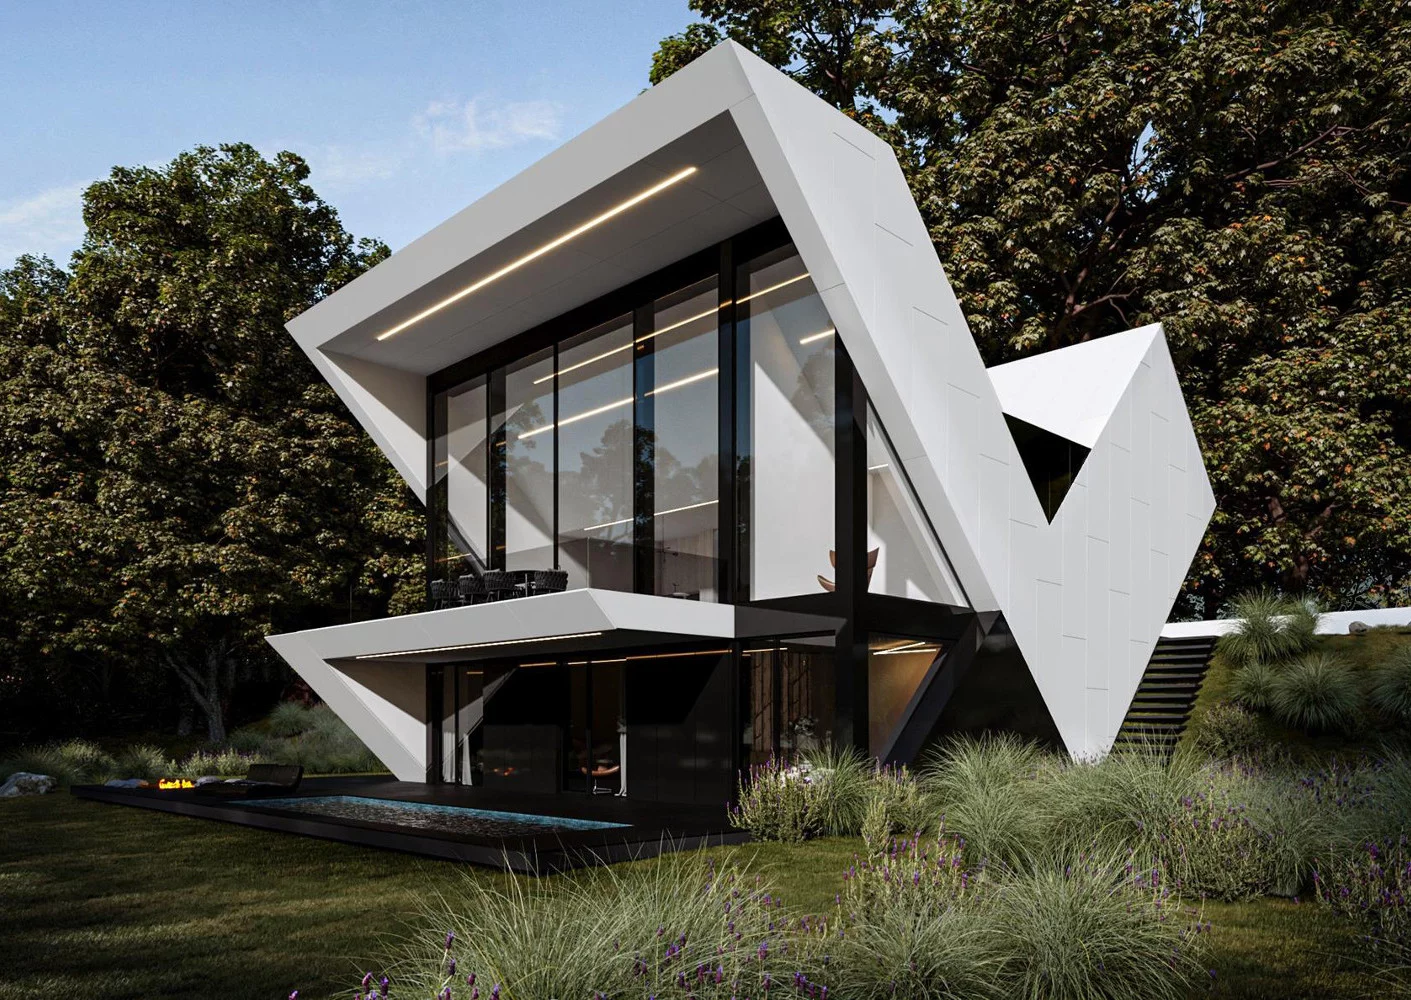 RE: VMAX HOUSE, projektu architekta Marcina Tomaszewskiego, REFORM Architekt